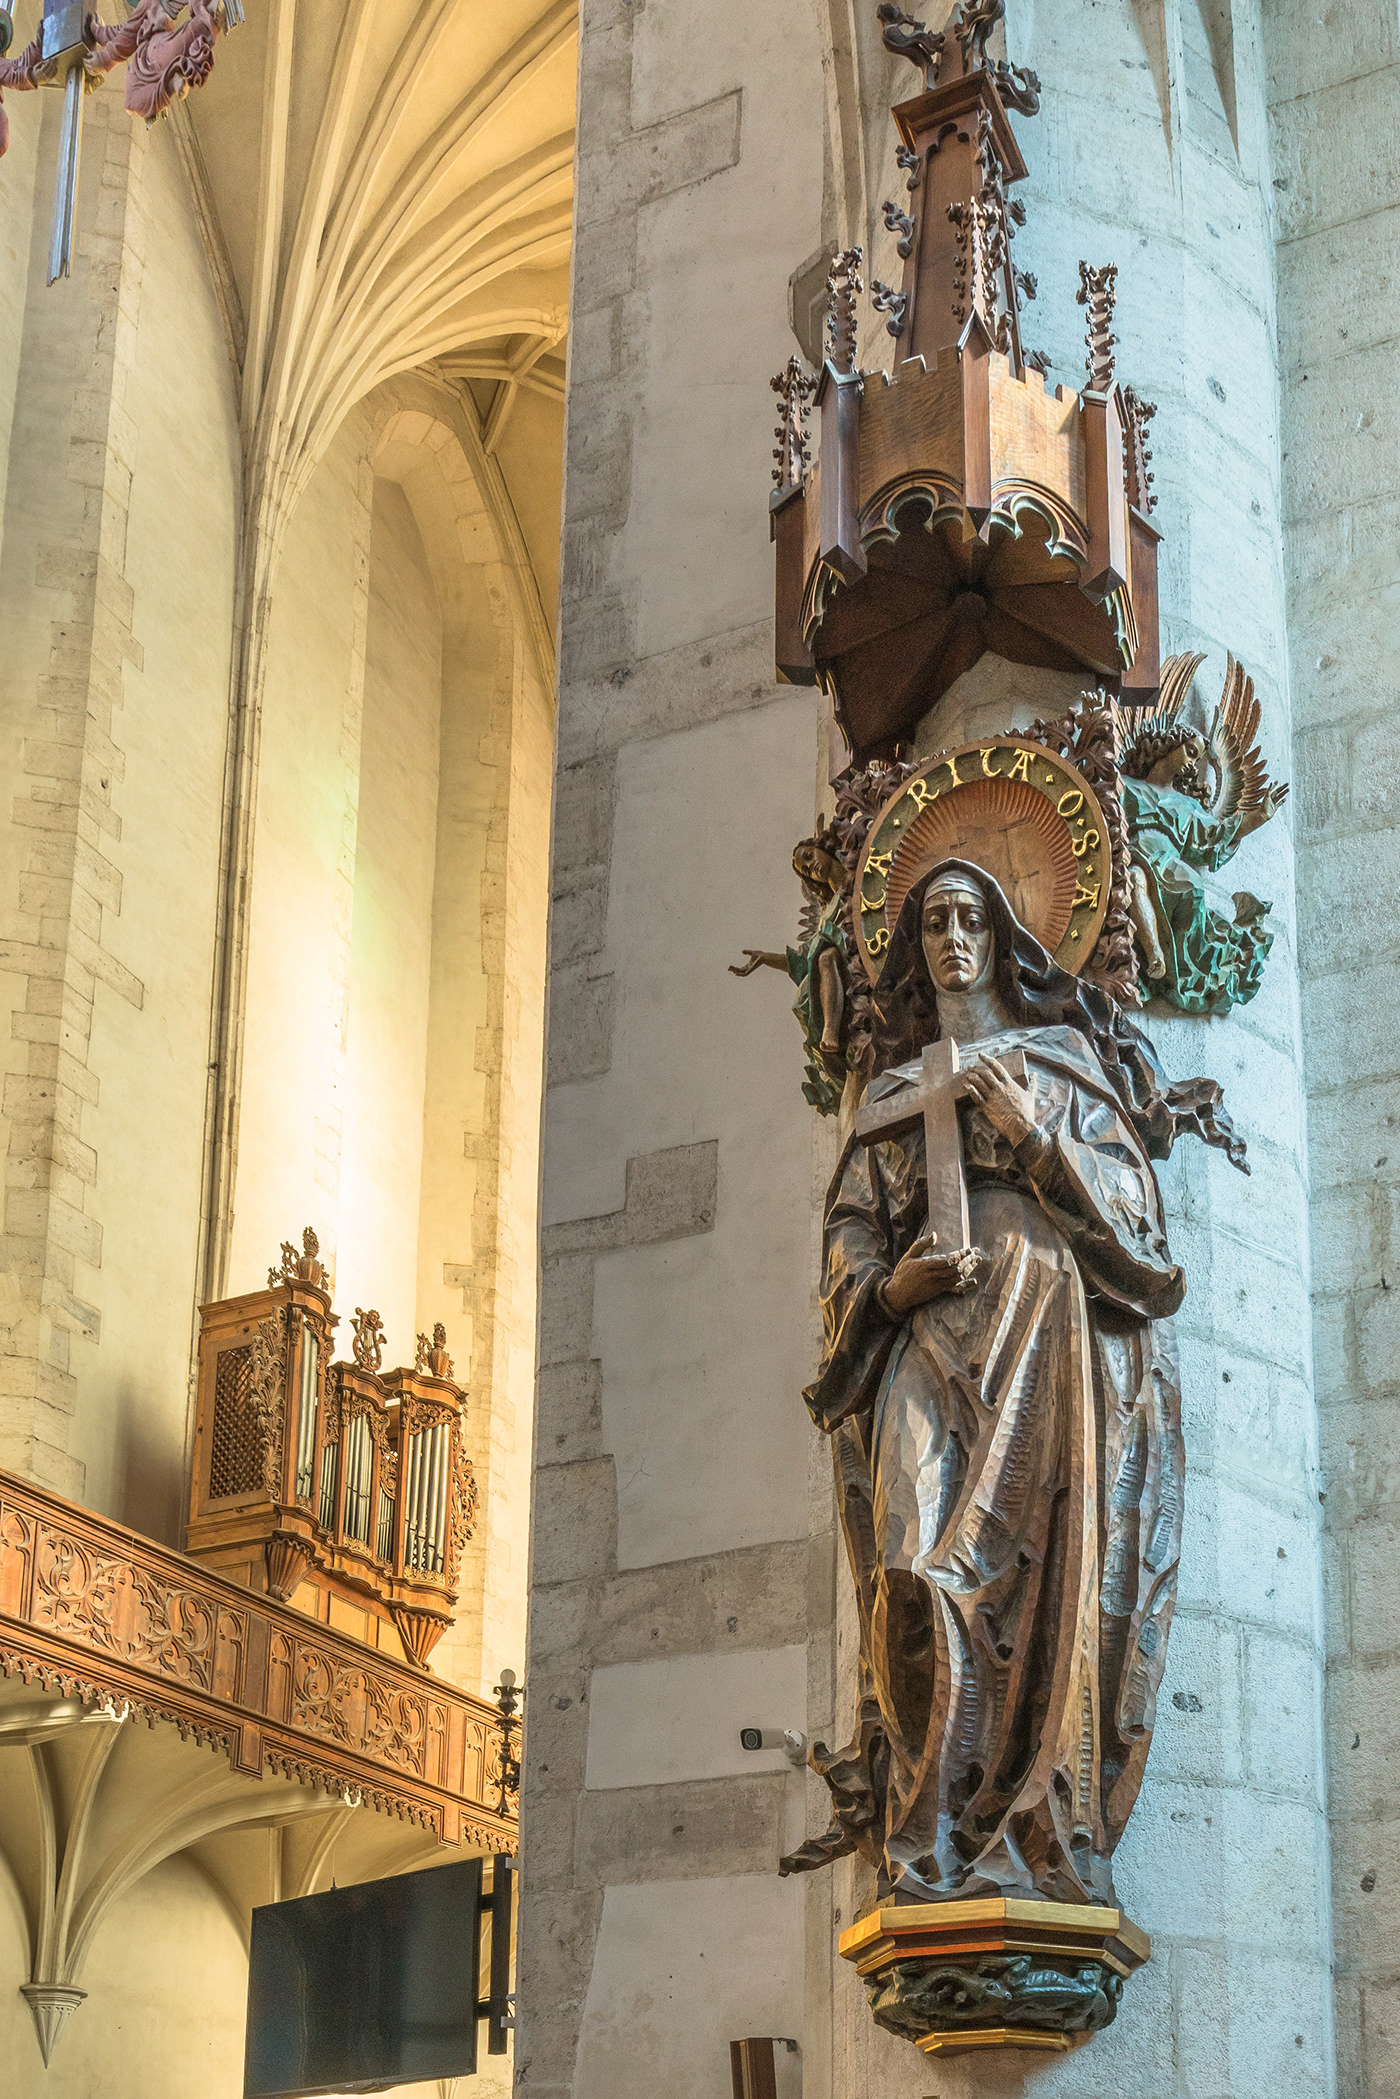 Church Catherine of Alexandria and Saint małgorzata krakow poland rita kazimierz Interior architecture